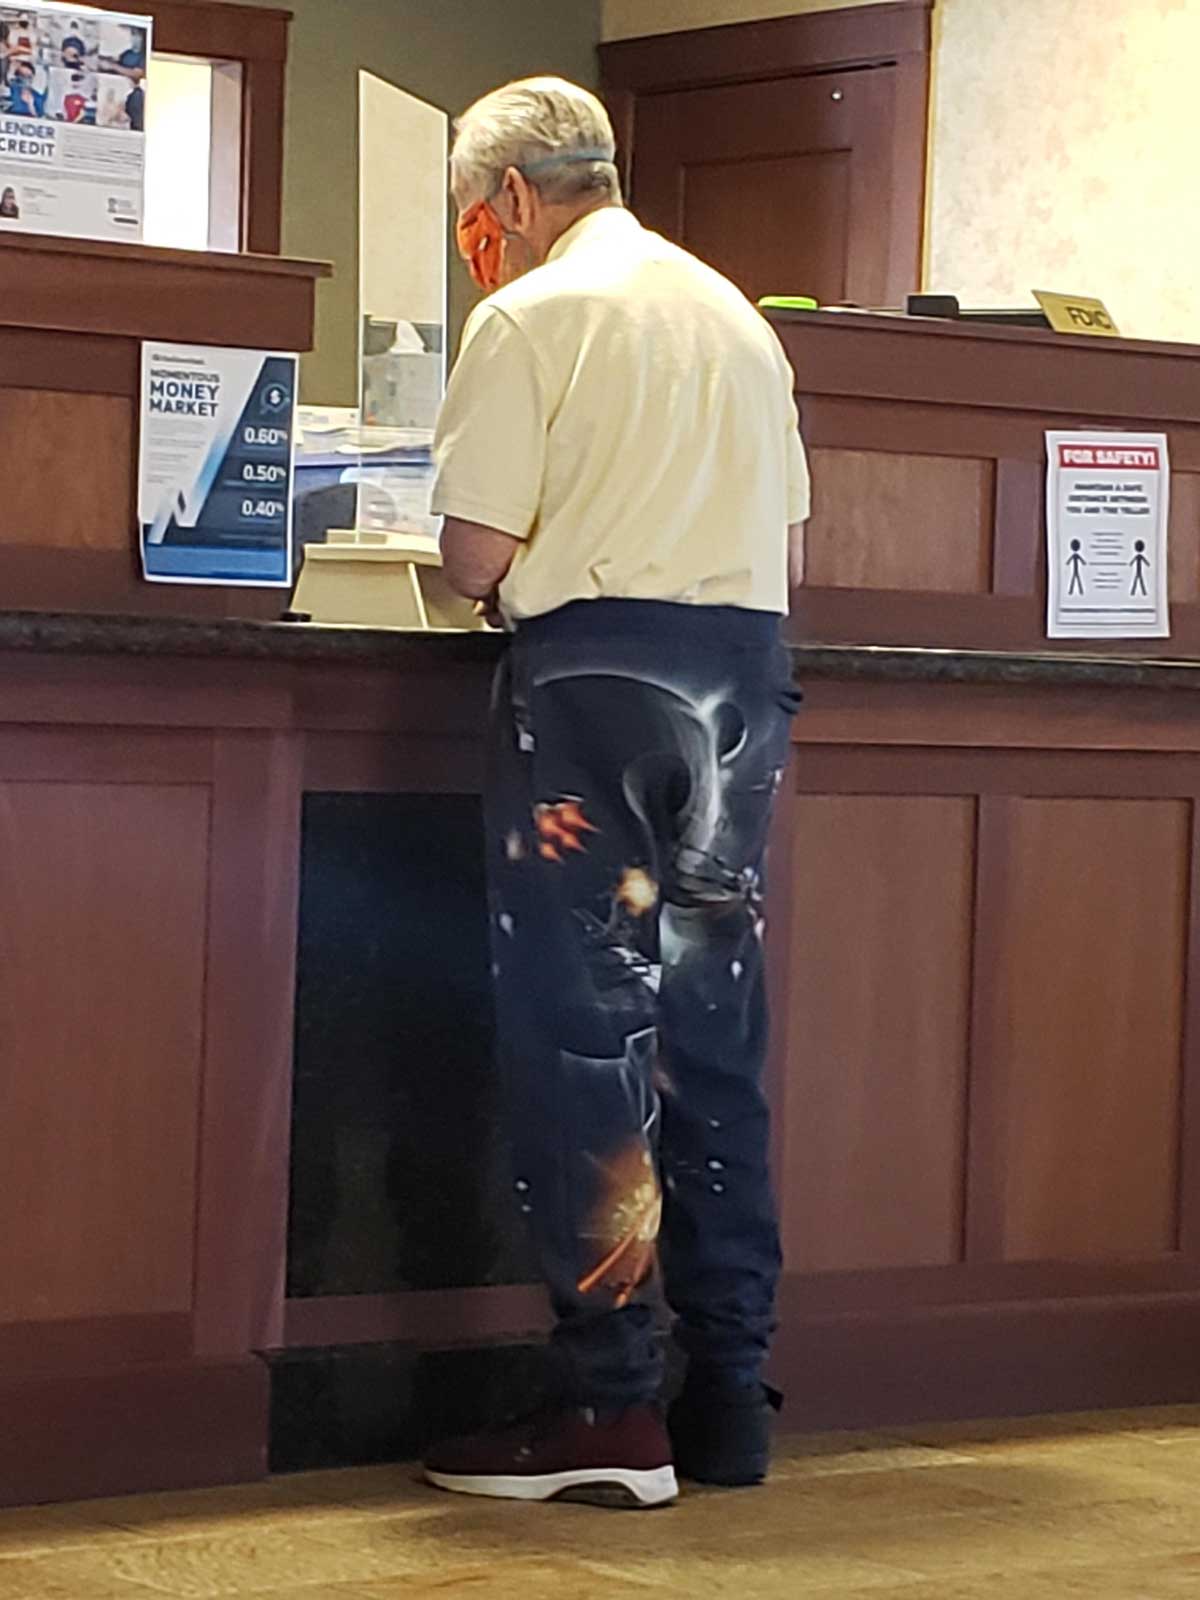 This guy I saw at the bank